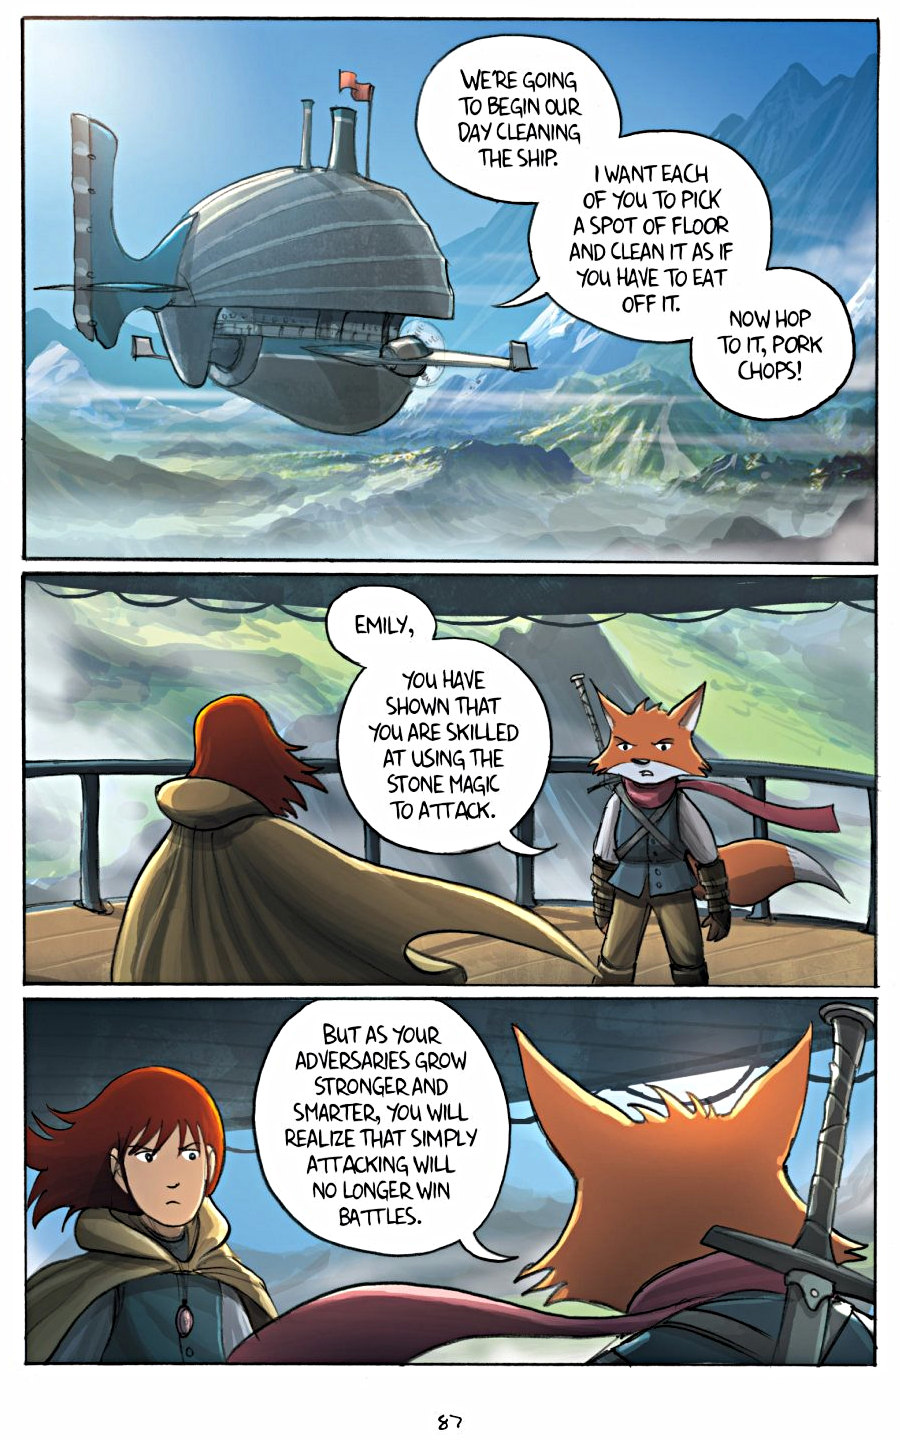 page 87 of amulet 3 cloud searchers graphic novel by kazu kibuishi